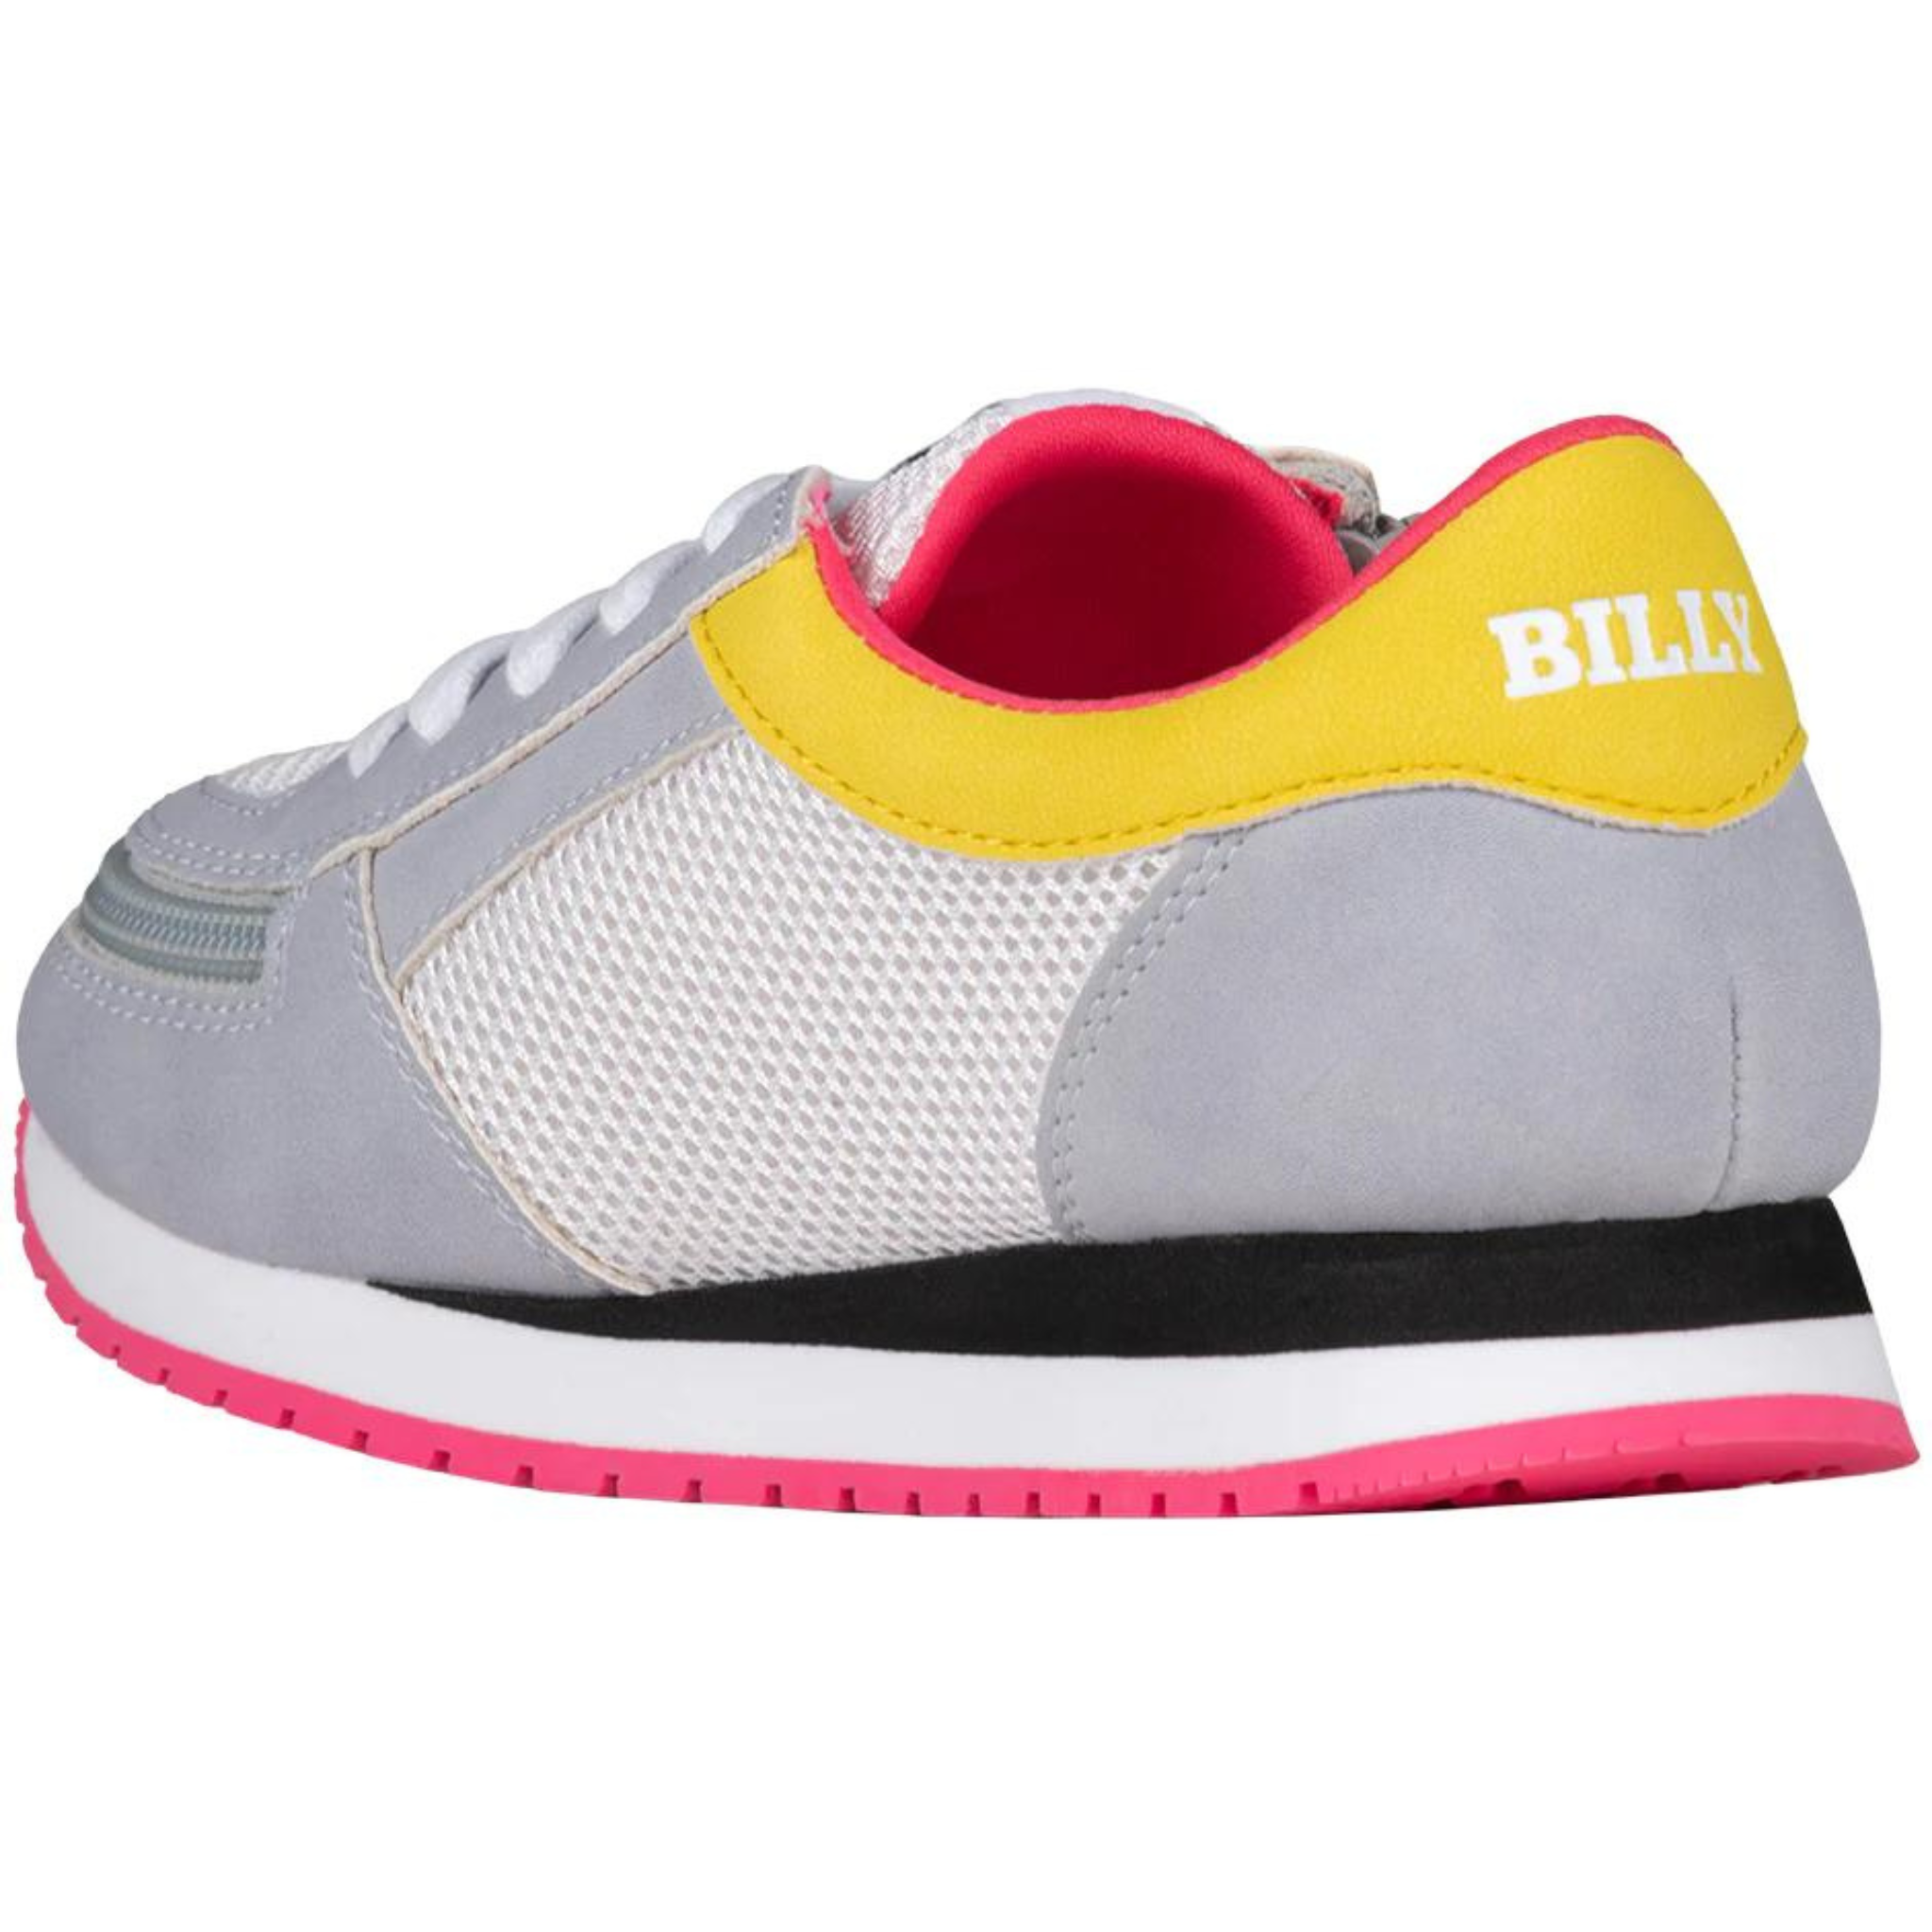 Billy Footwear (Kids) - Trainers Faux Suede Grey / Pink